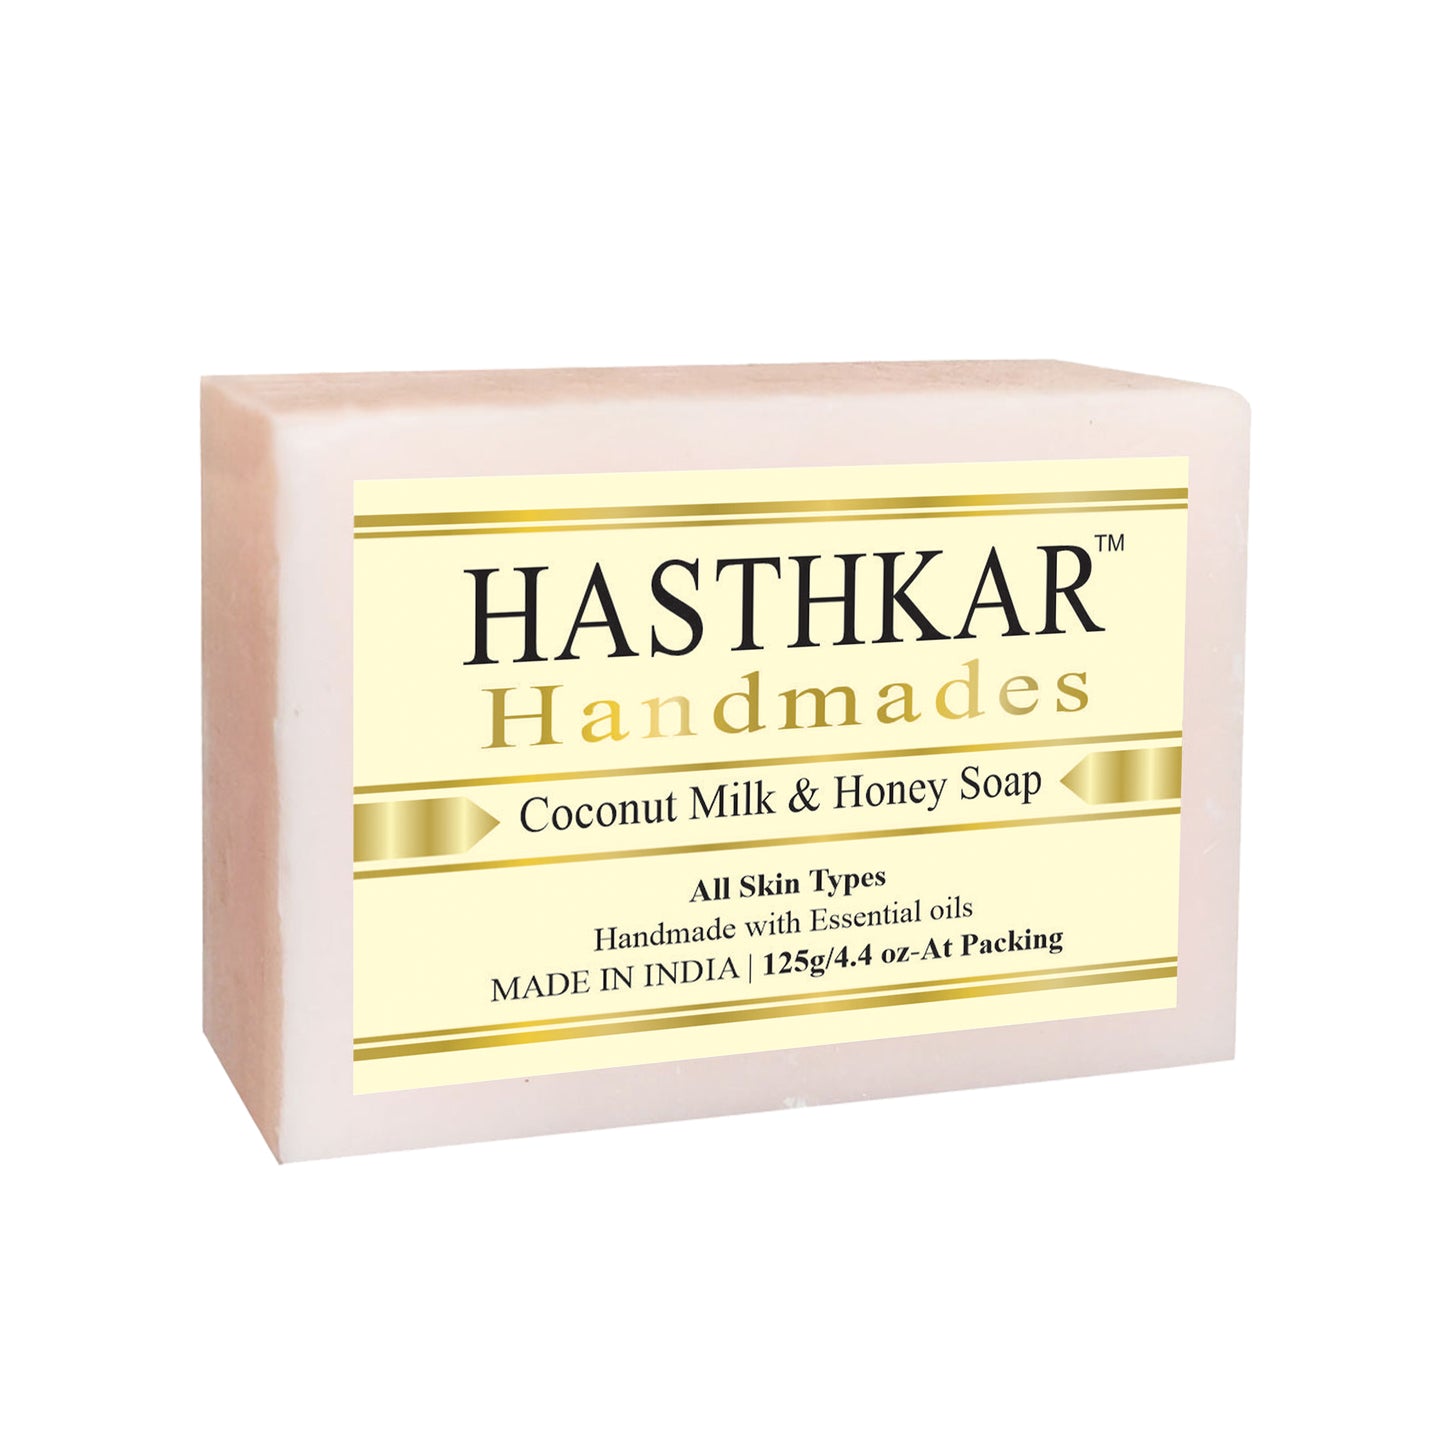 Hasthkar Handmades Glycerine Coconut milk & honey Soap 125gm Pack of 6